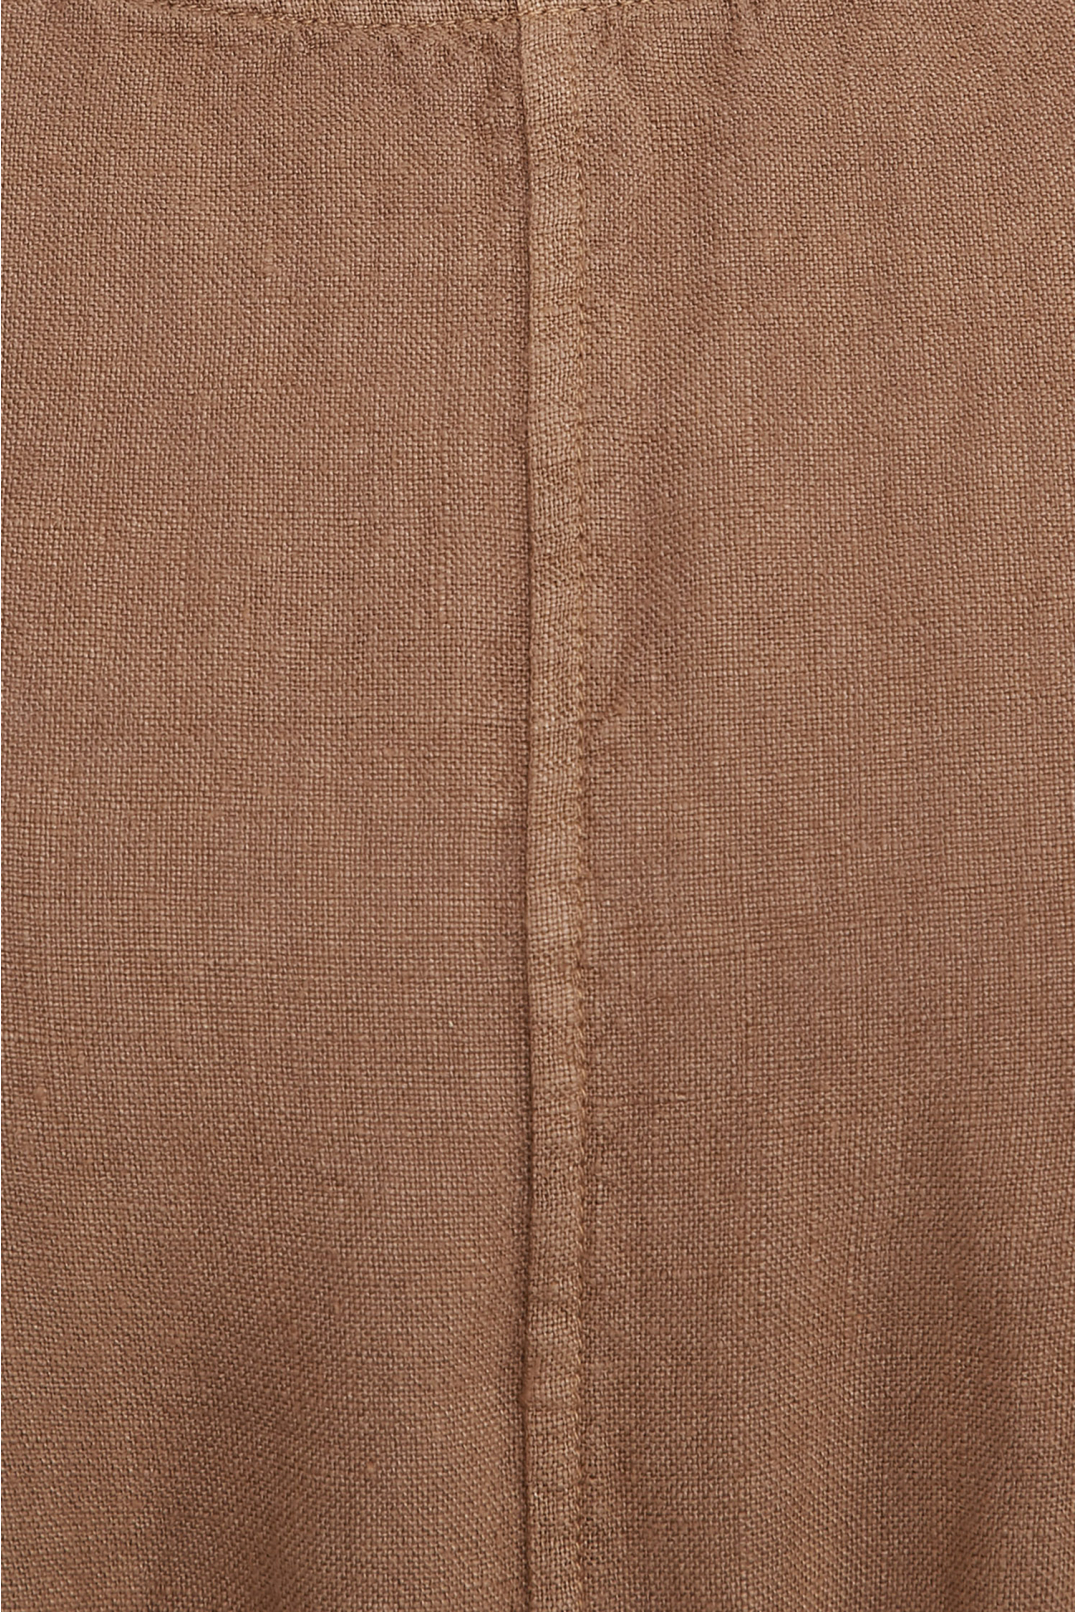 Женский коричневый льняной сарафан - 4